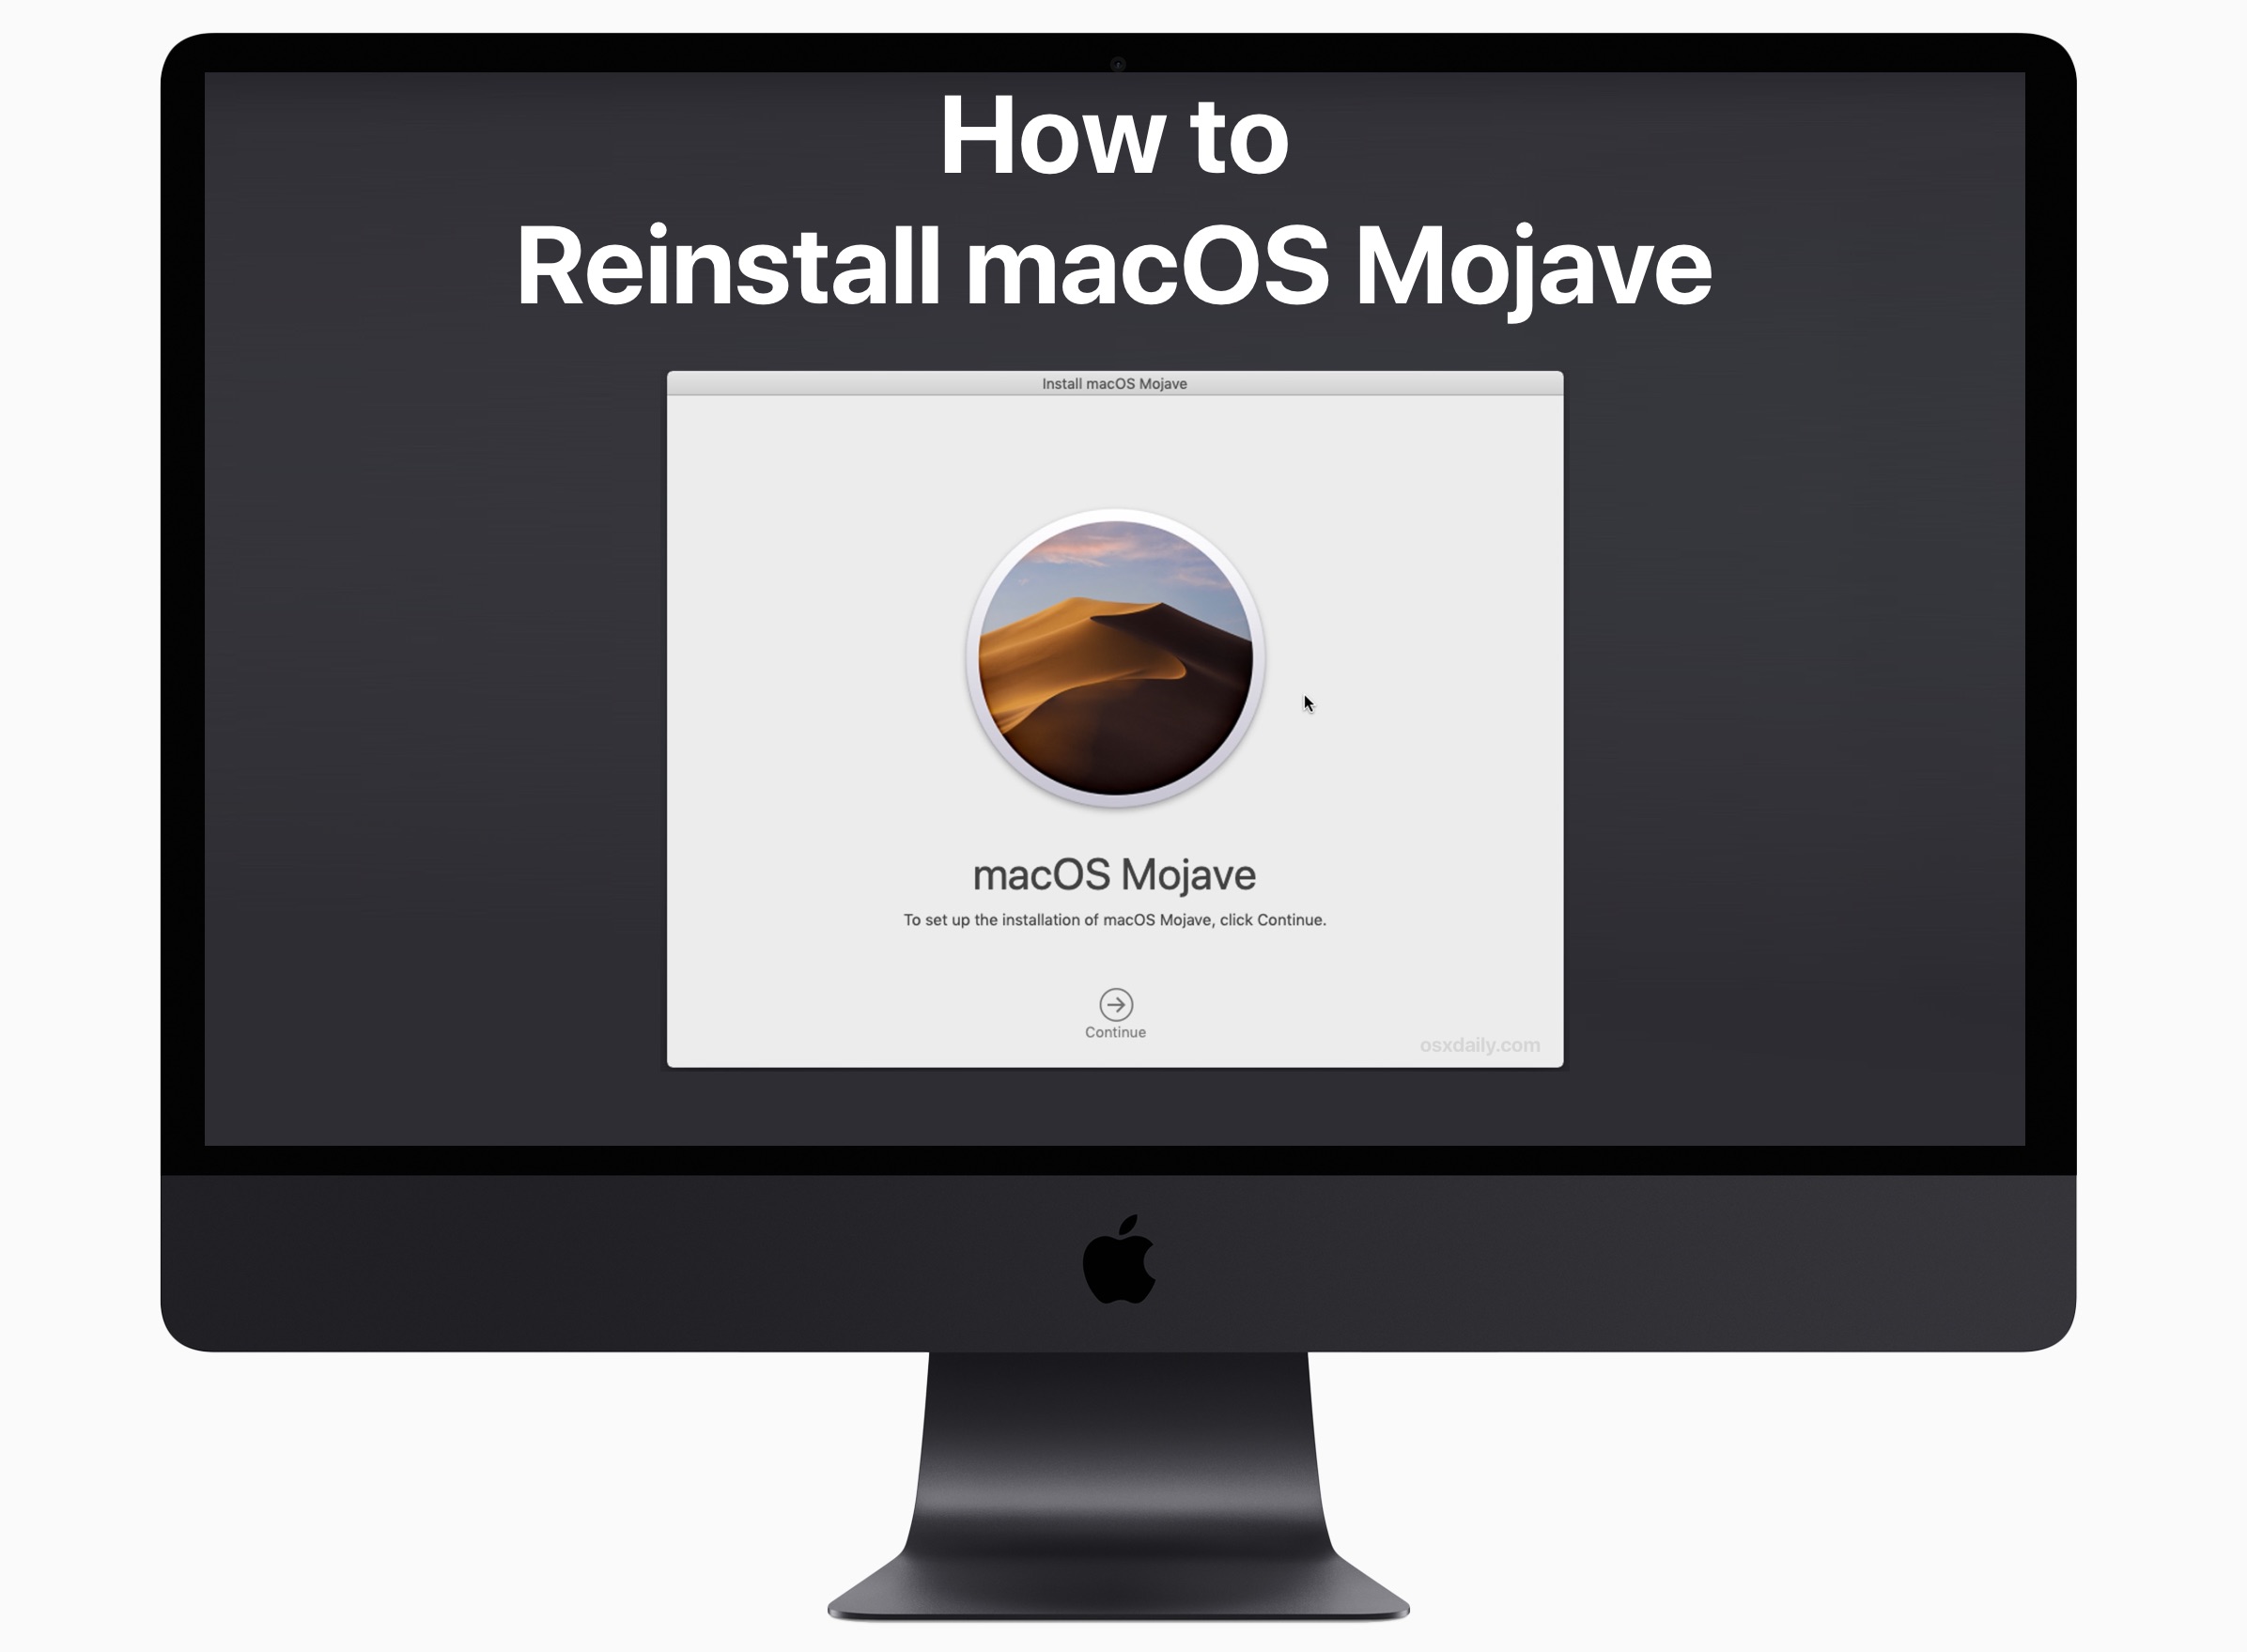 instal the new for mac OkMap Desktop 17.10.6